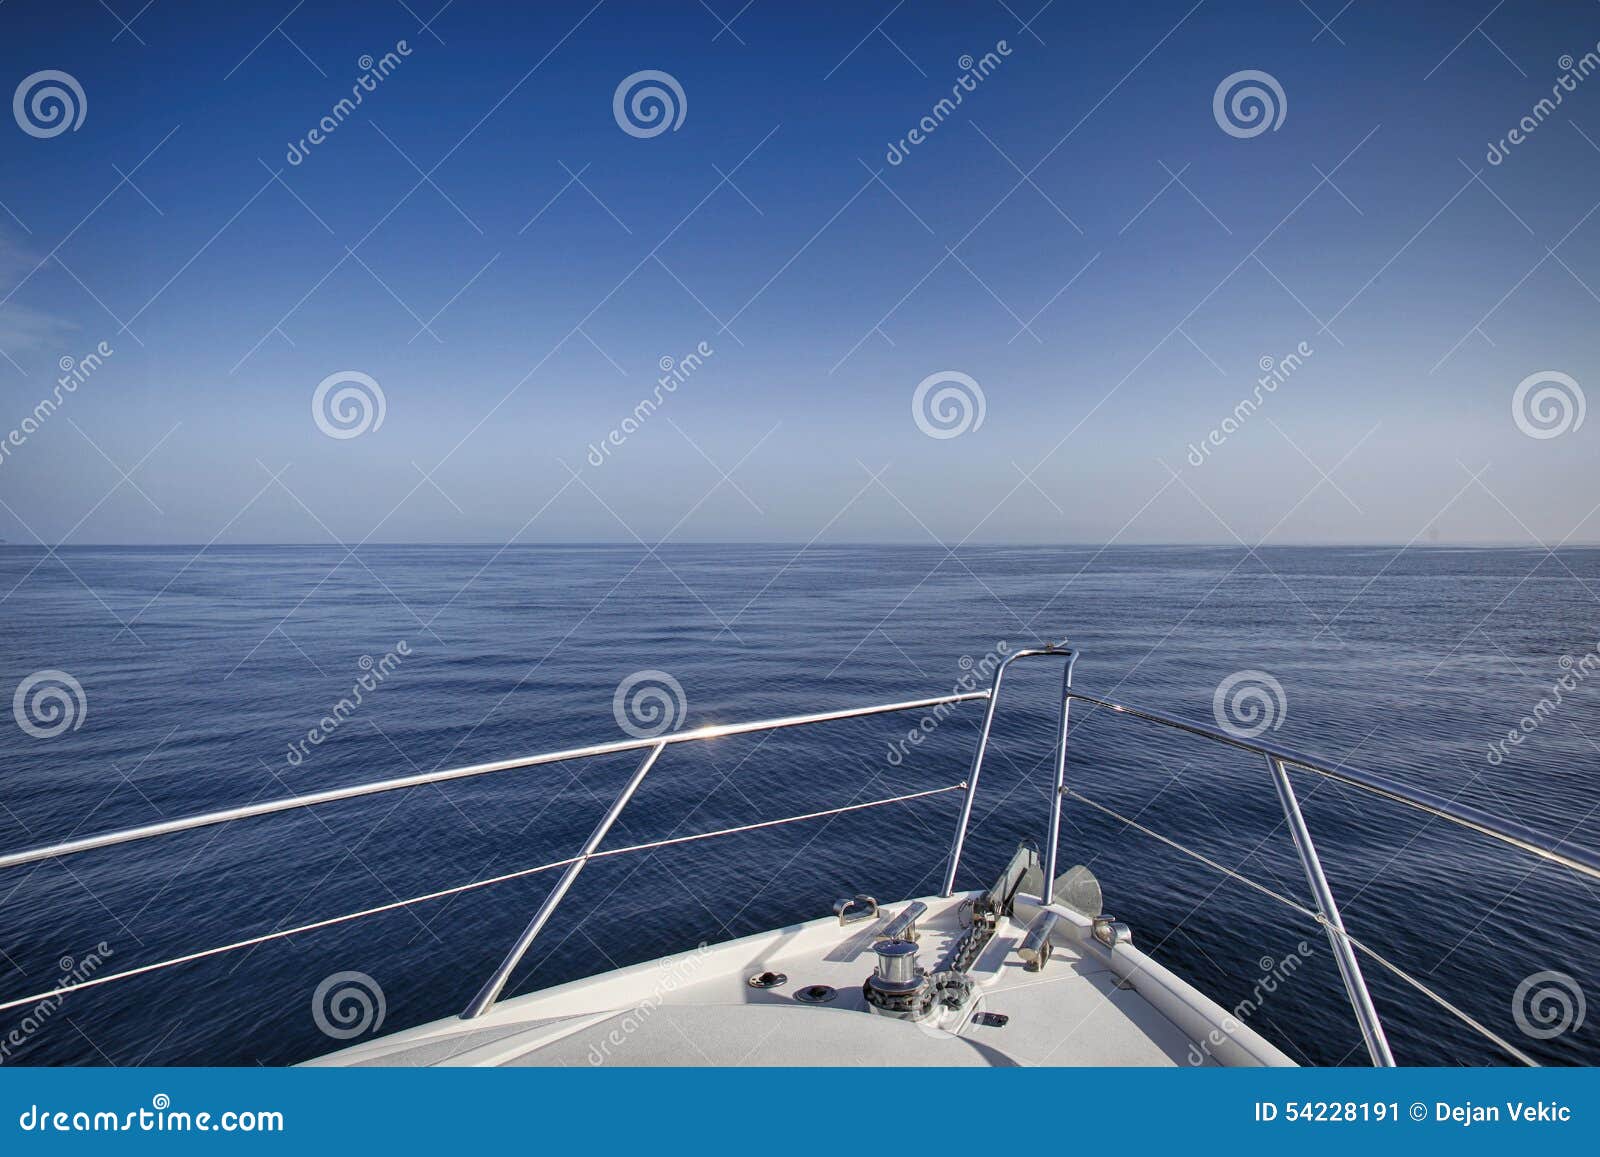 motor yacht sailing